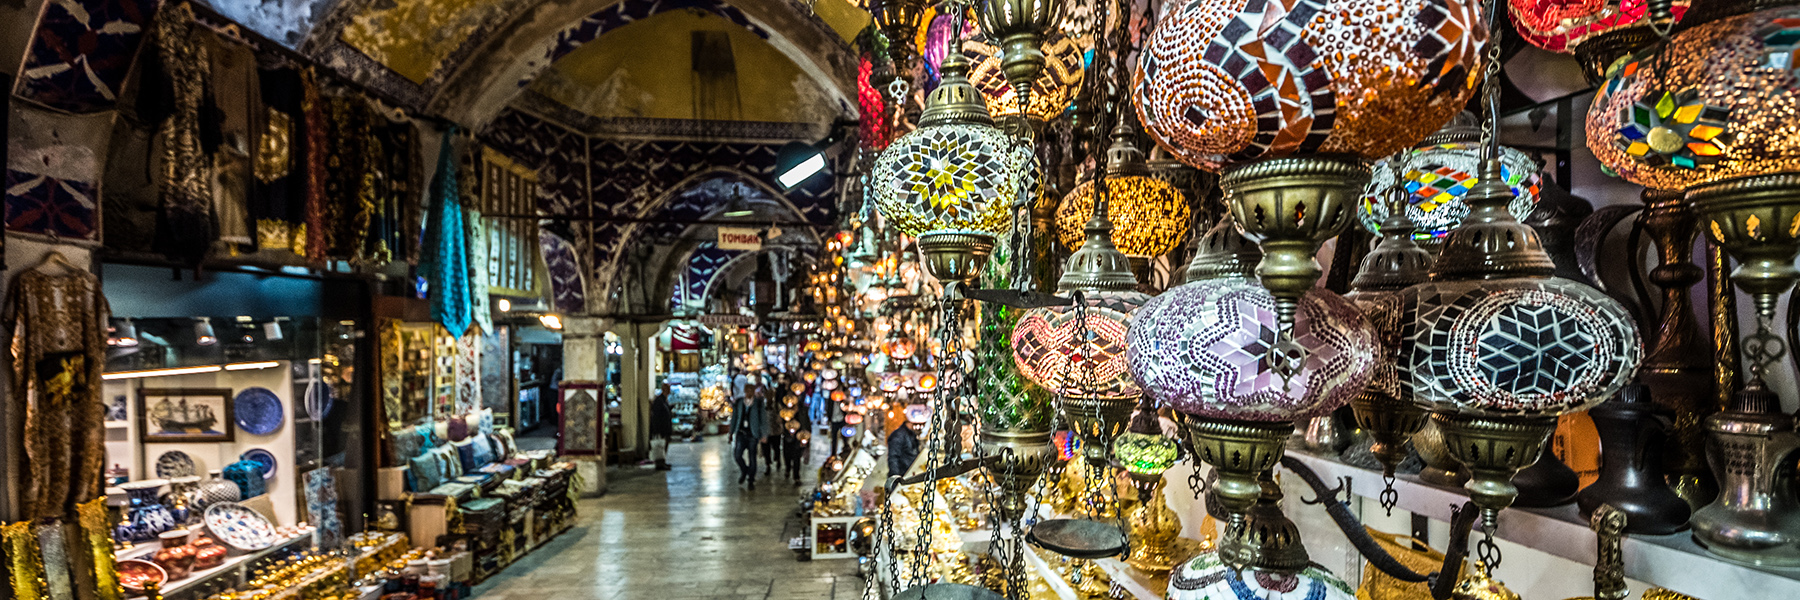 the Grand Bazaar in Istanbul, Turkey